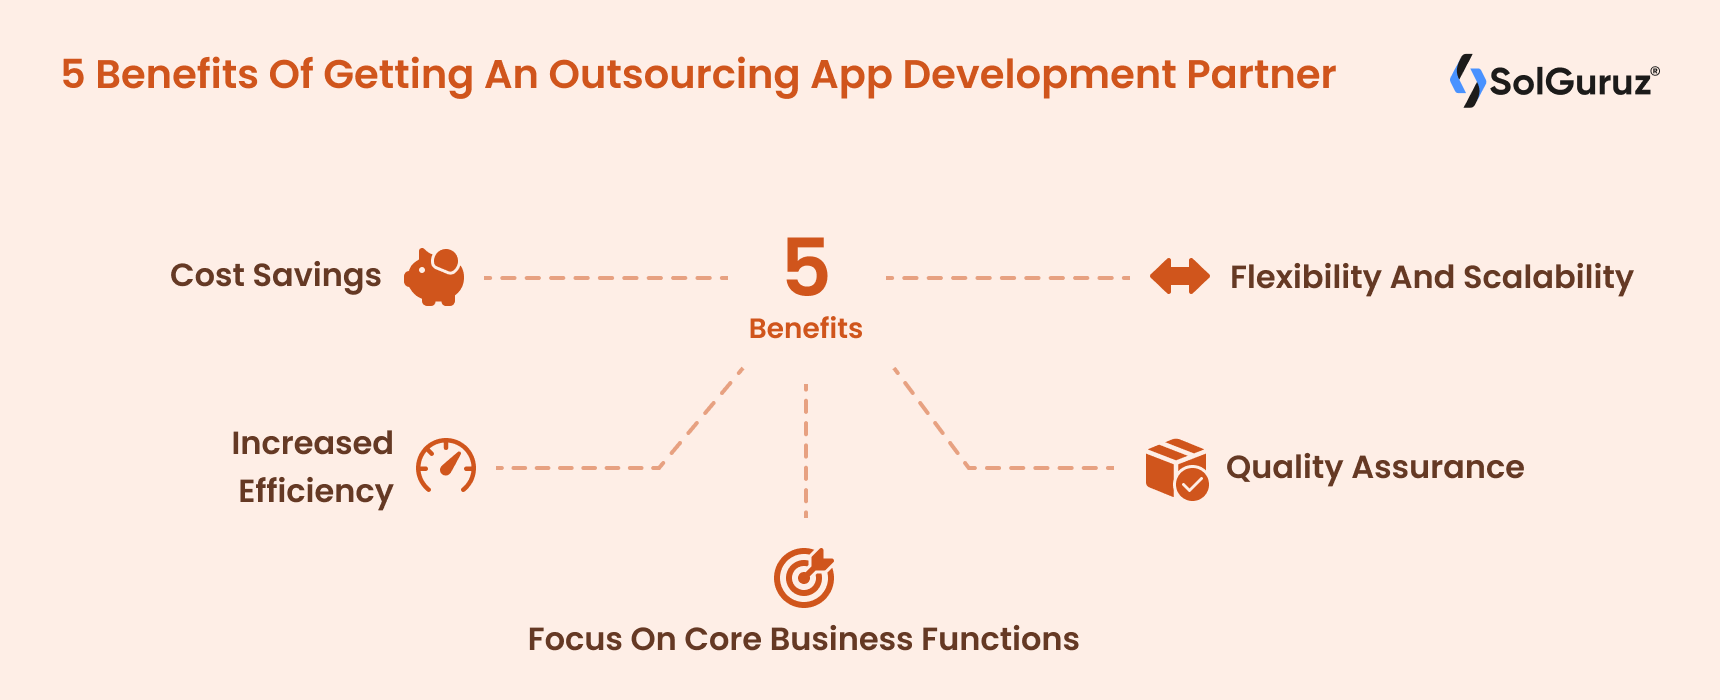 5 Benefits Of Getting An Outsourcing App Development Partner